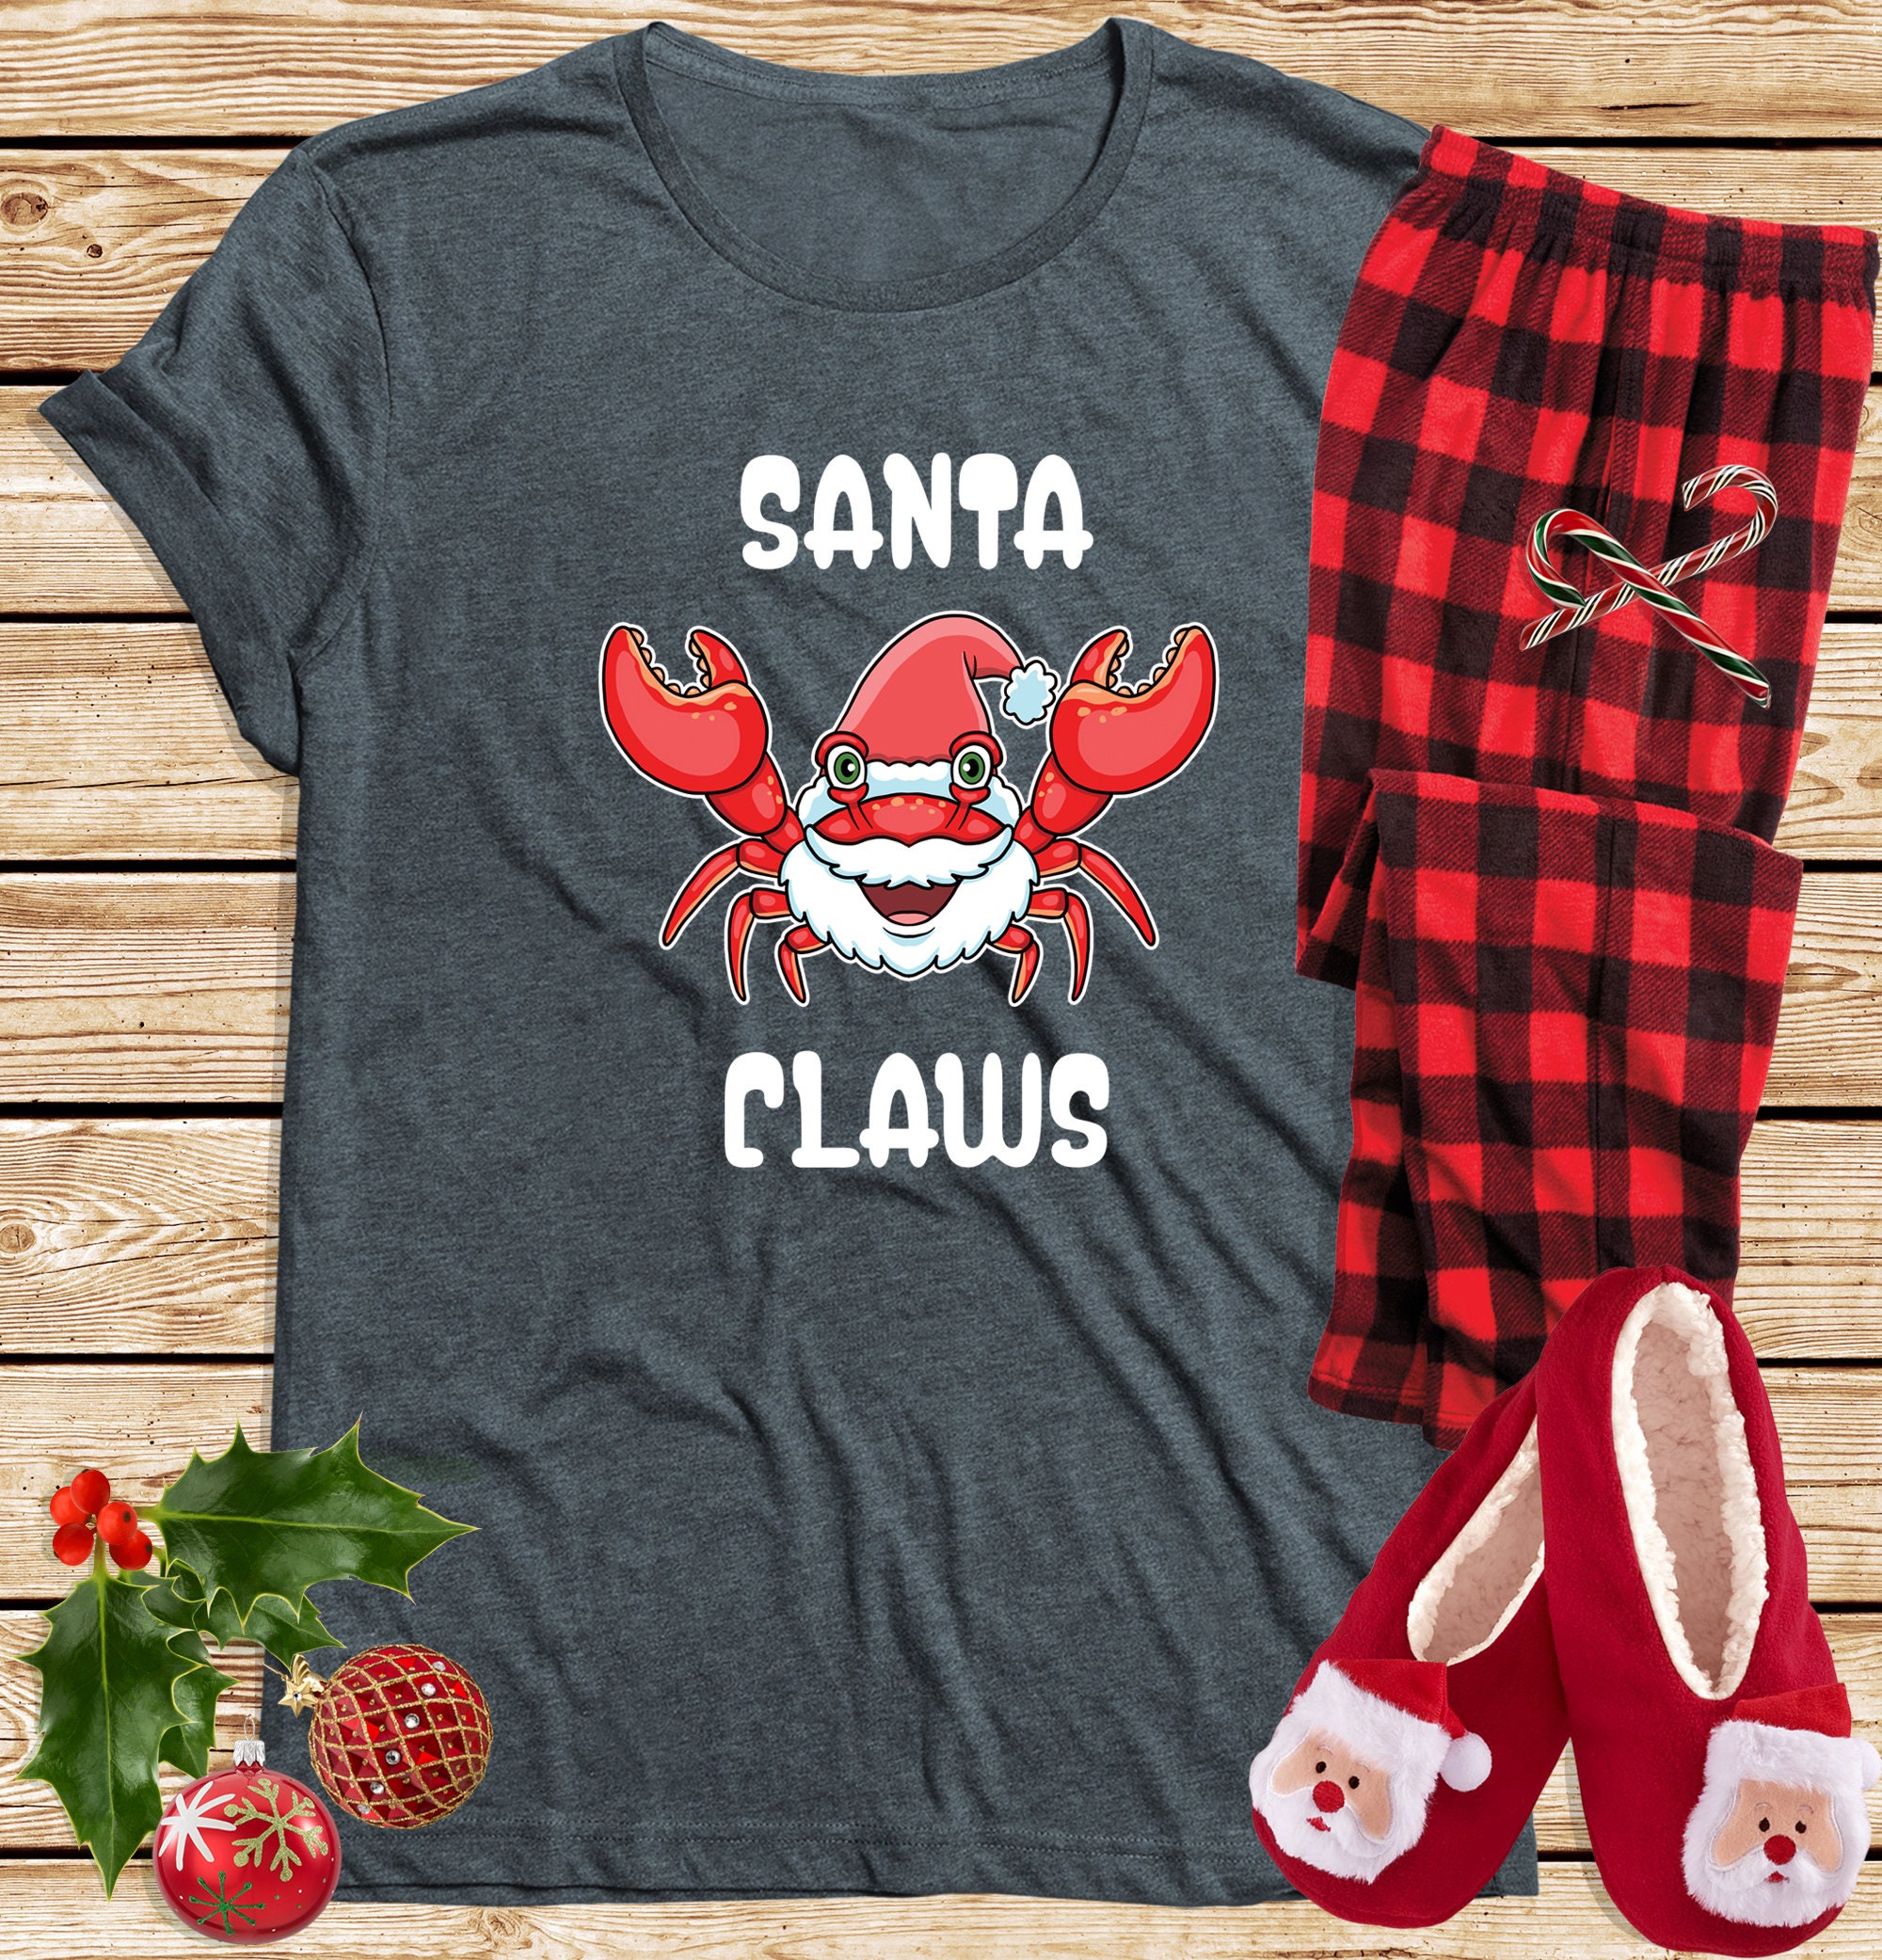 Santa Claws Tshirt, Funny Animal Puns Shirt, Christmas Gifts, Holiday Unisex T-Shirt S-3xl